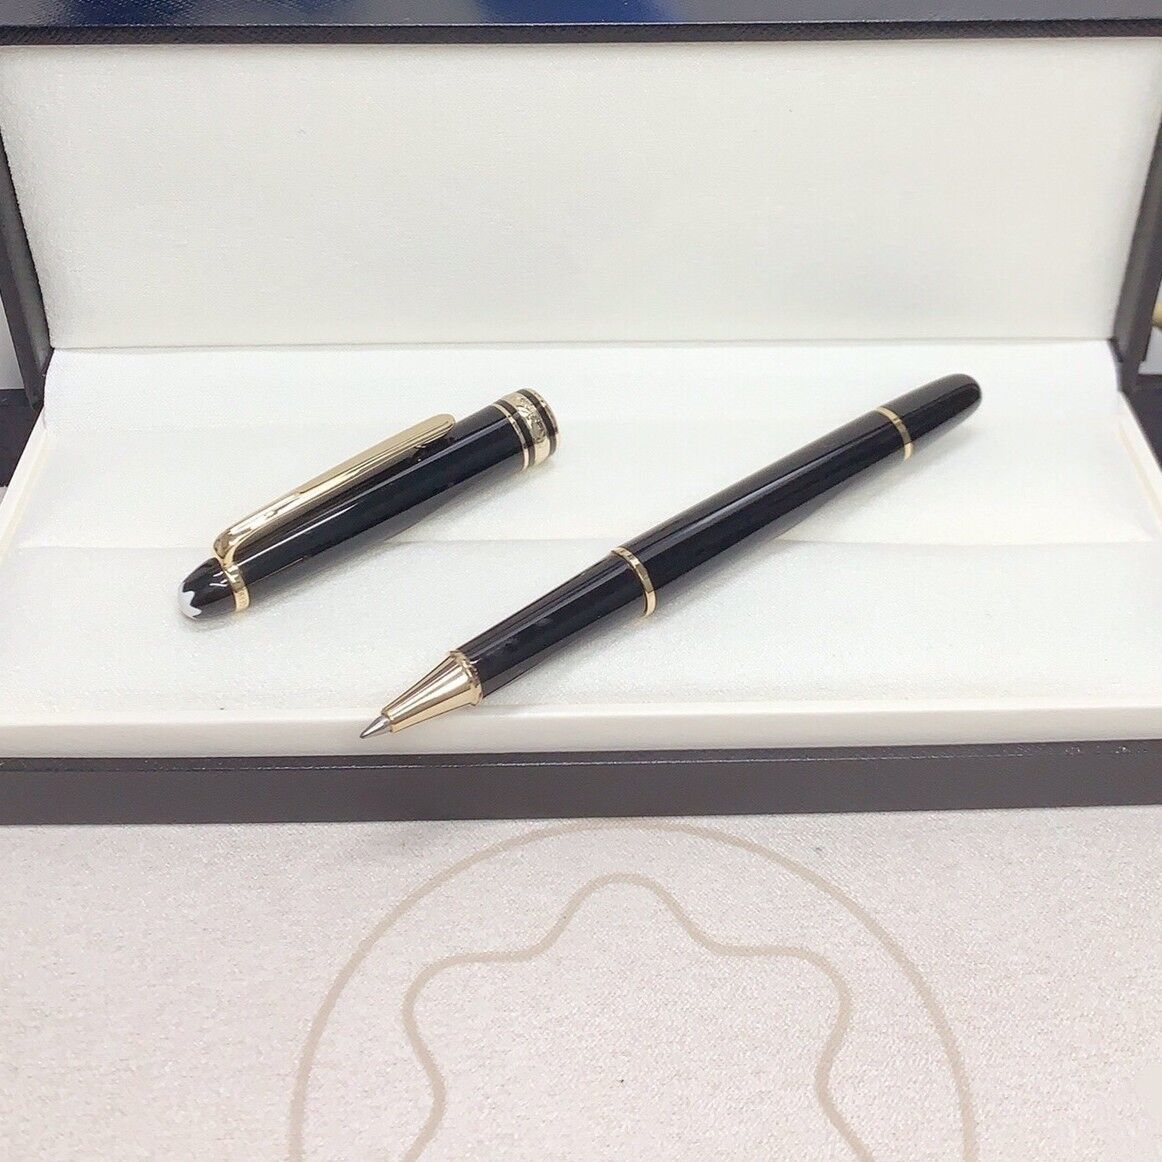 Luxury 163 Resin Series Bright Black+Gold Clip 0.7mm nib Rollerball Pen No Box